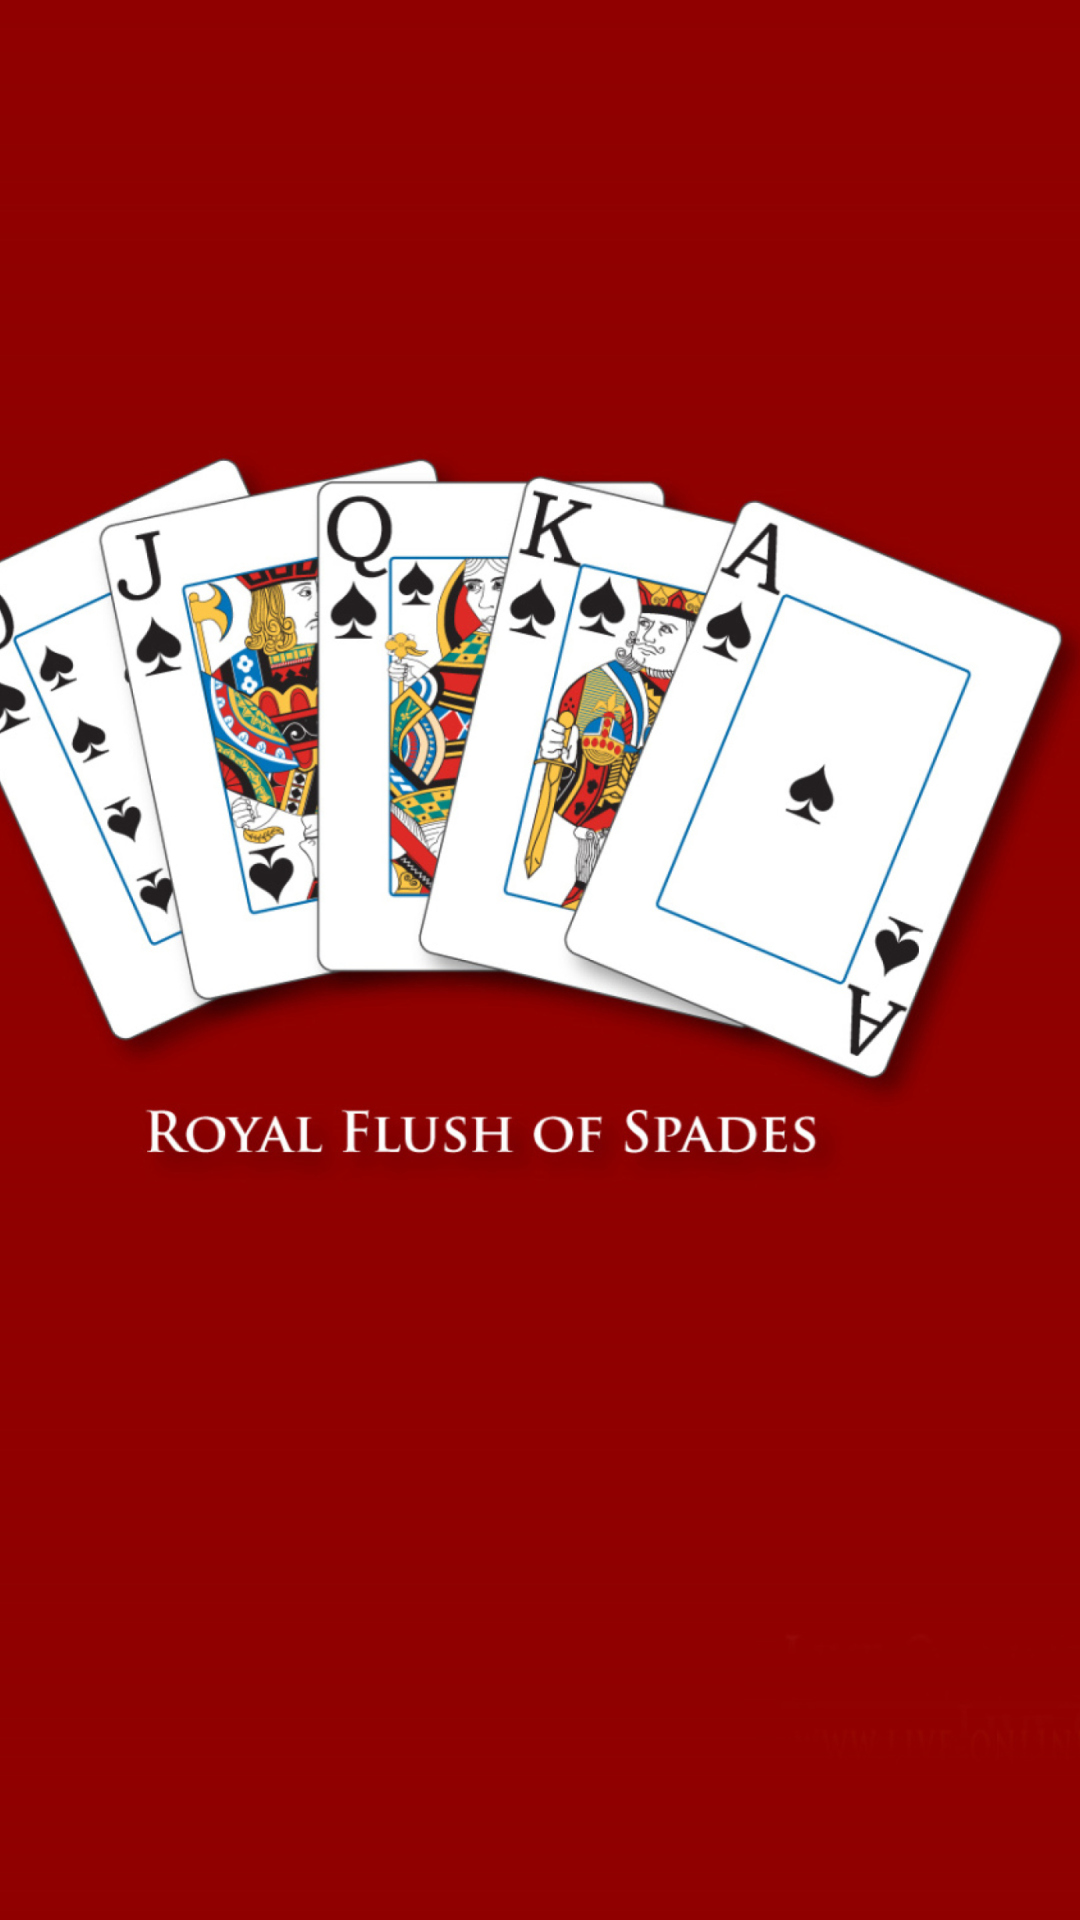 Royal Flush Of Spades wallpaper 1080x1920